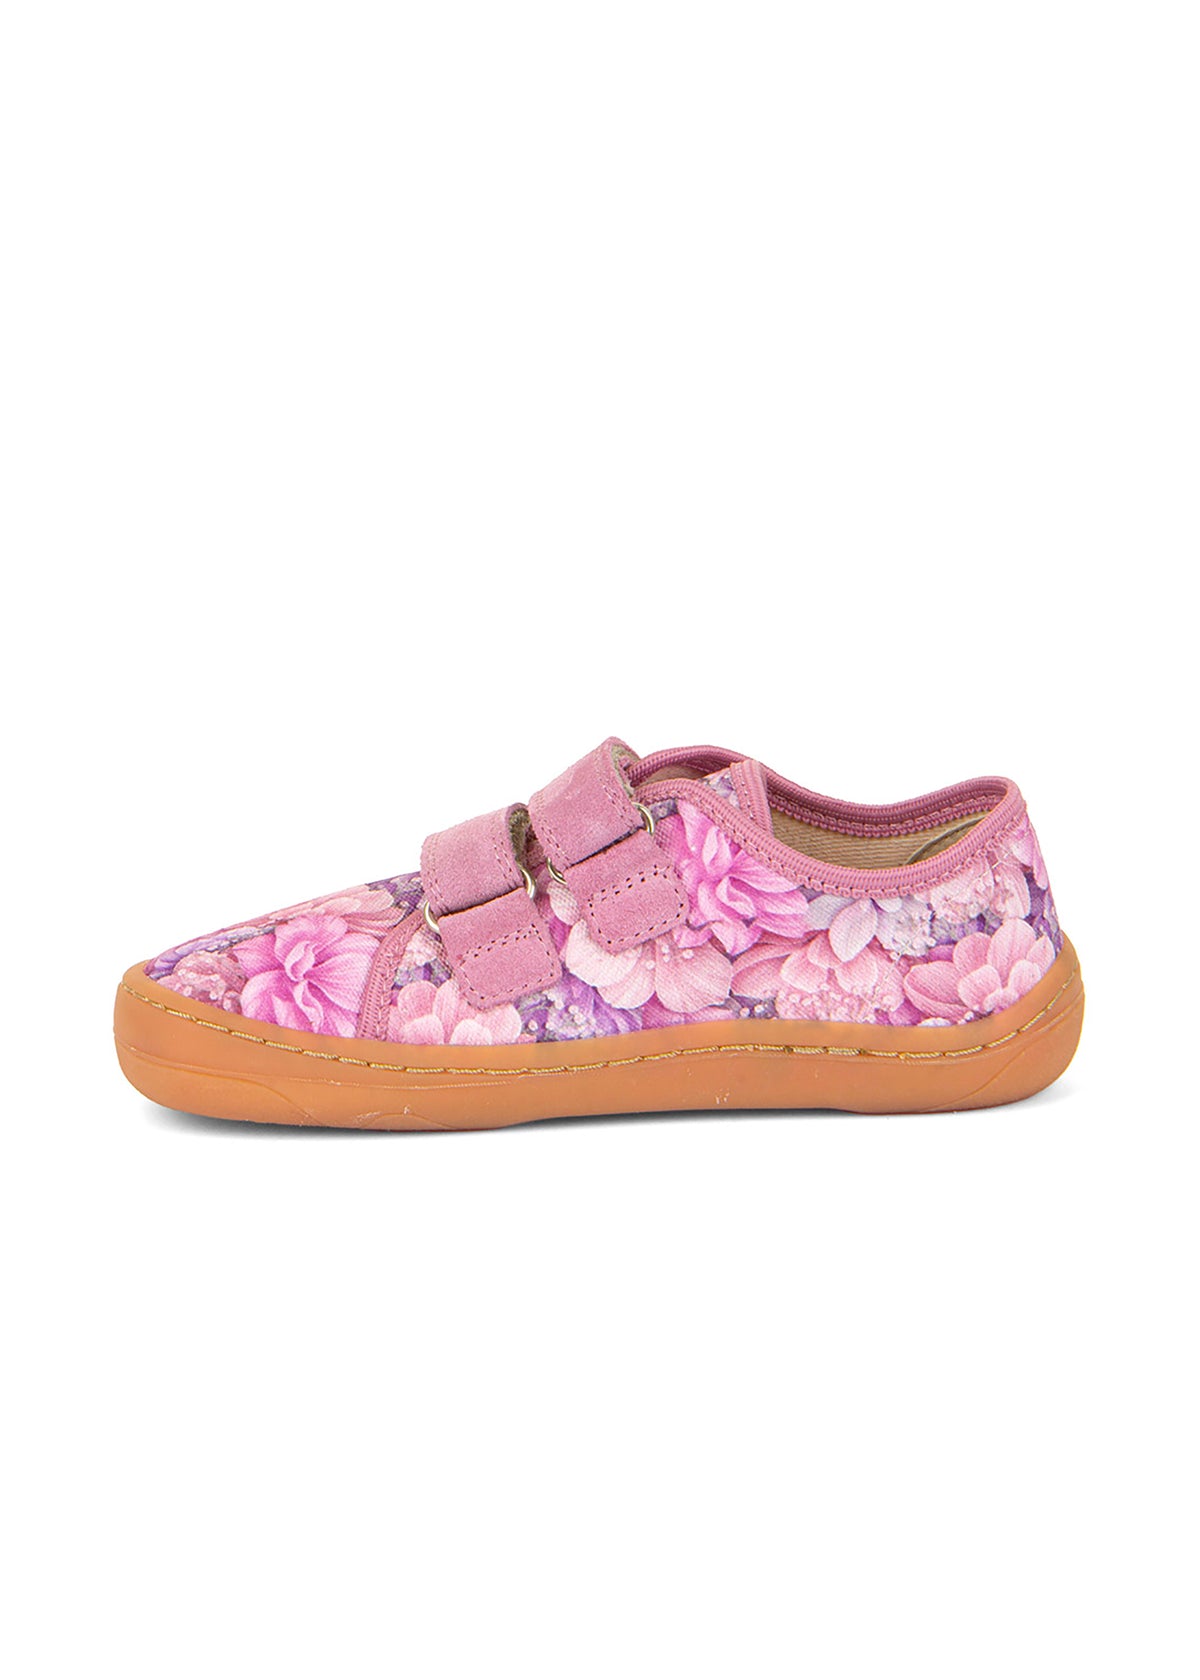 Barns barfota sneakers - rosa, blommor